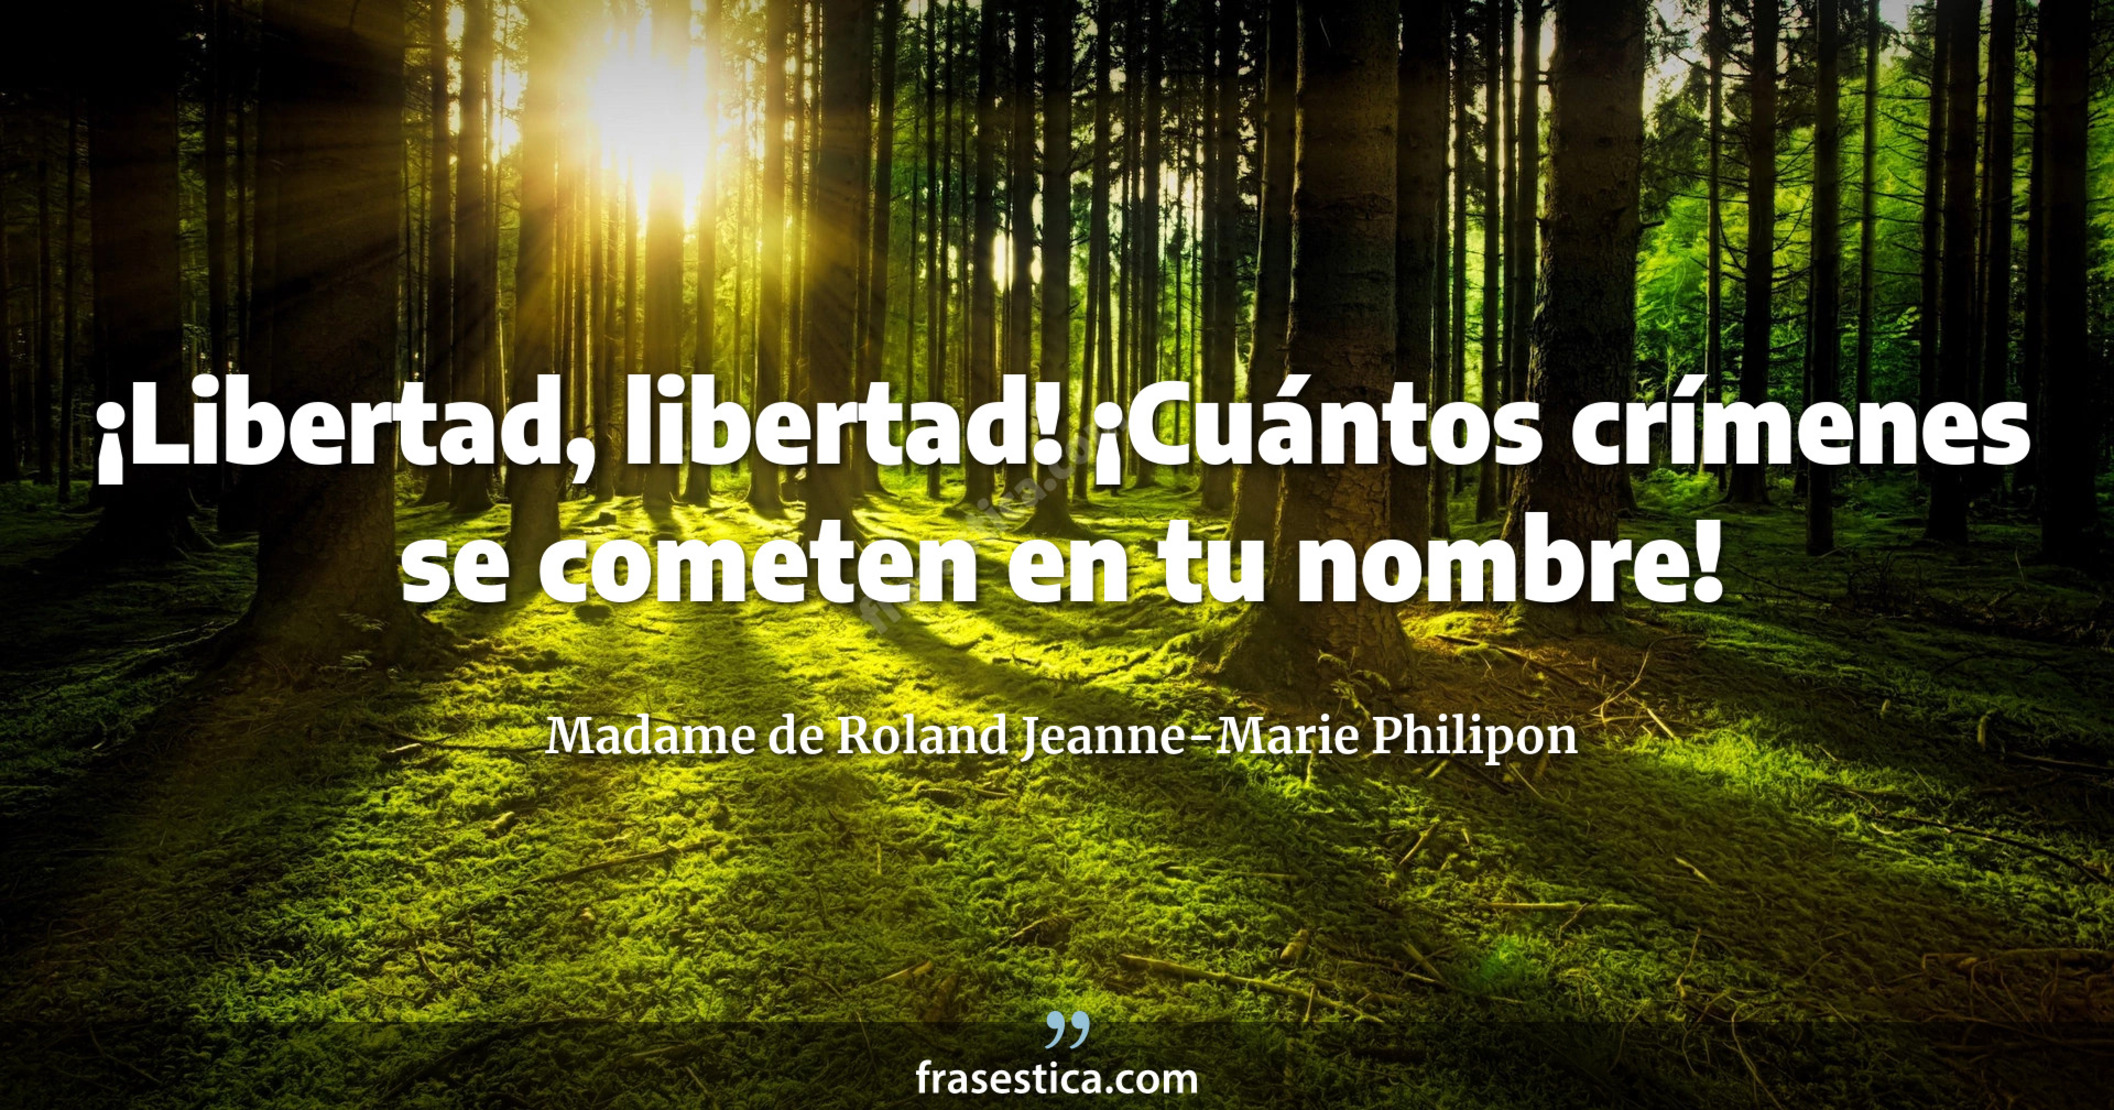 ¡Libertad, libertad! ¡Cuántos crímenes se cometen en tu nombre! - Madame de Roland Jeanne-Marie Philipon